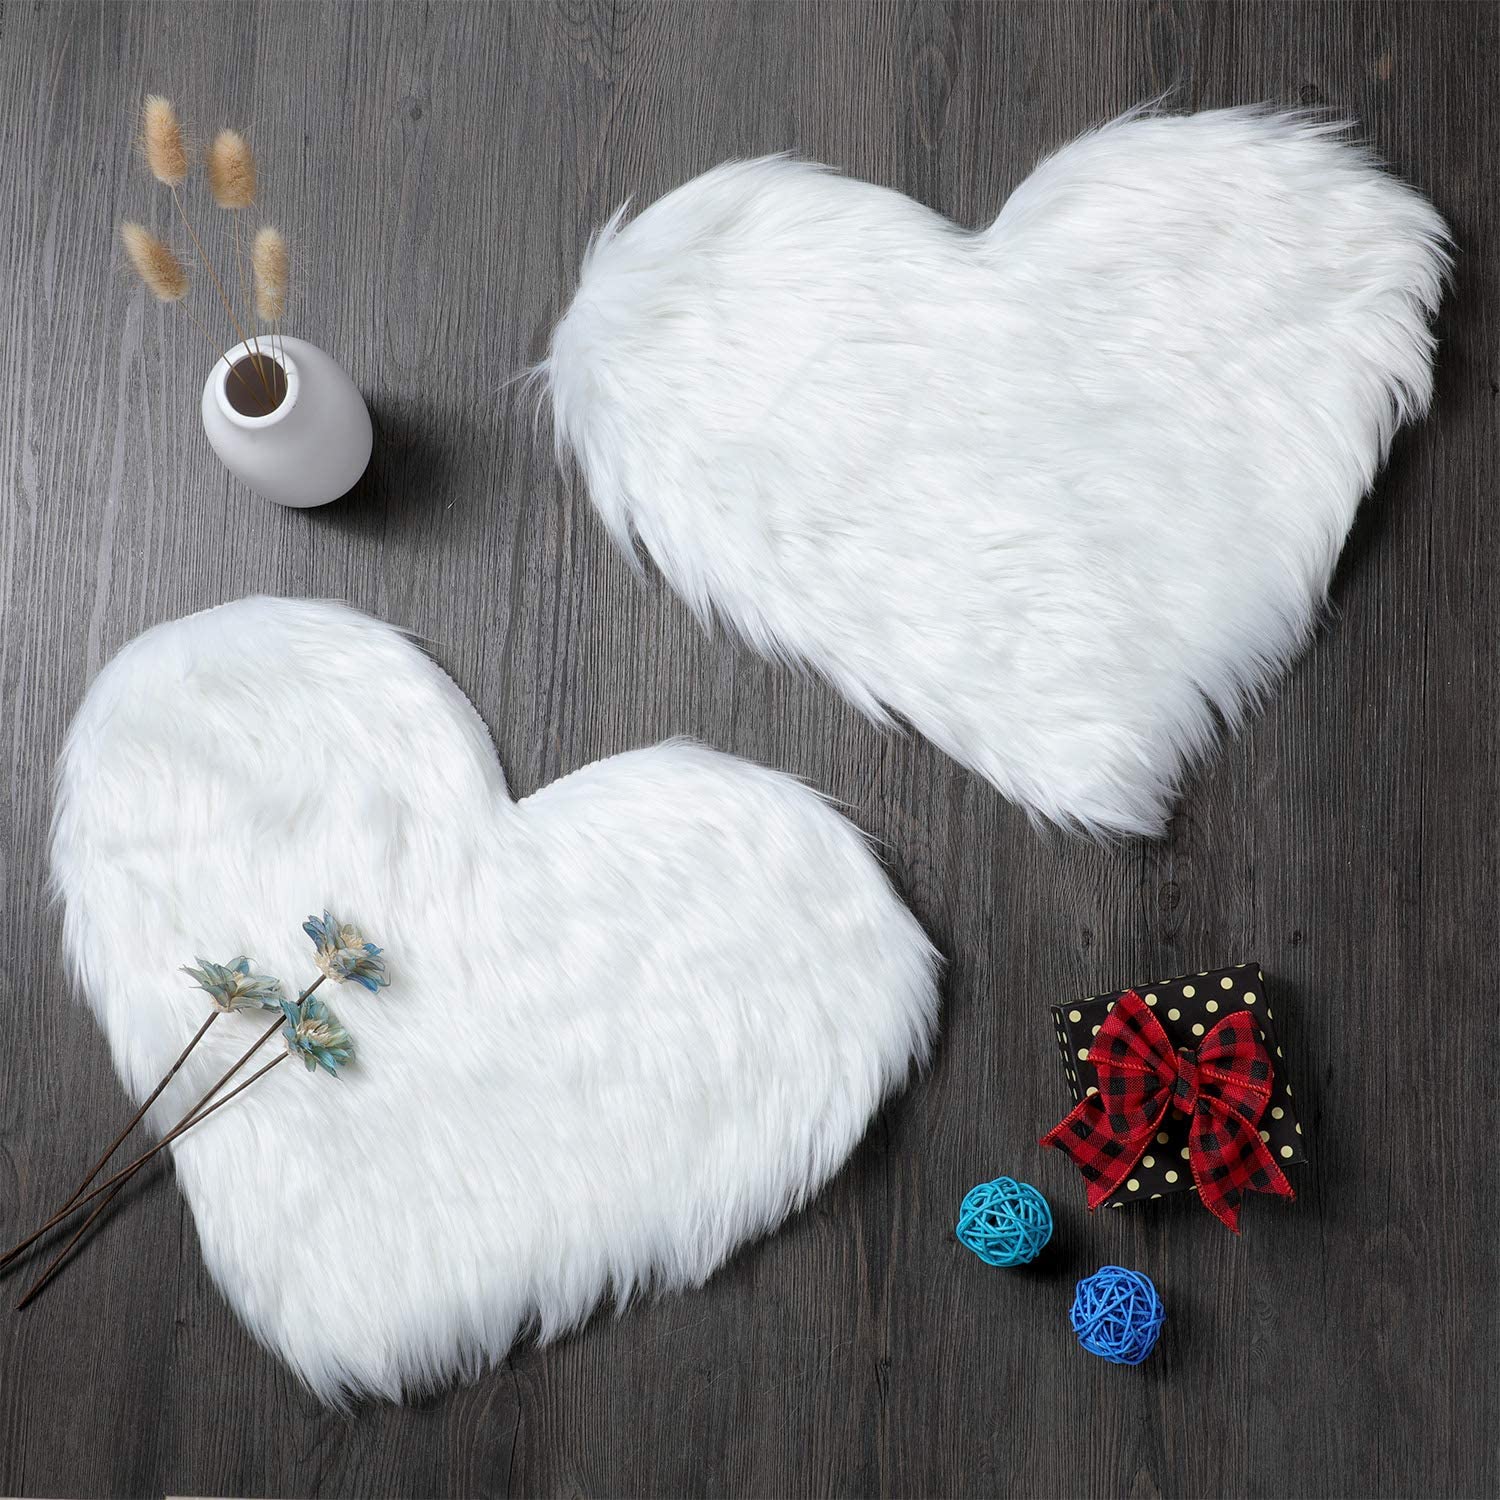 Red Love Heart Shaped Carpet - Soft Tufted Rug for Living Room Decor, –  DormVibes